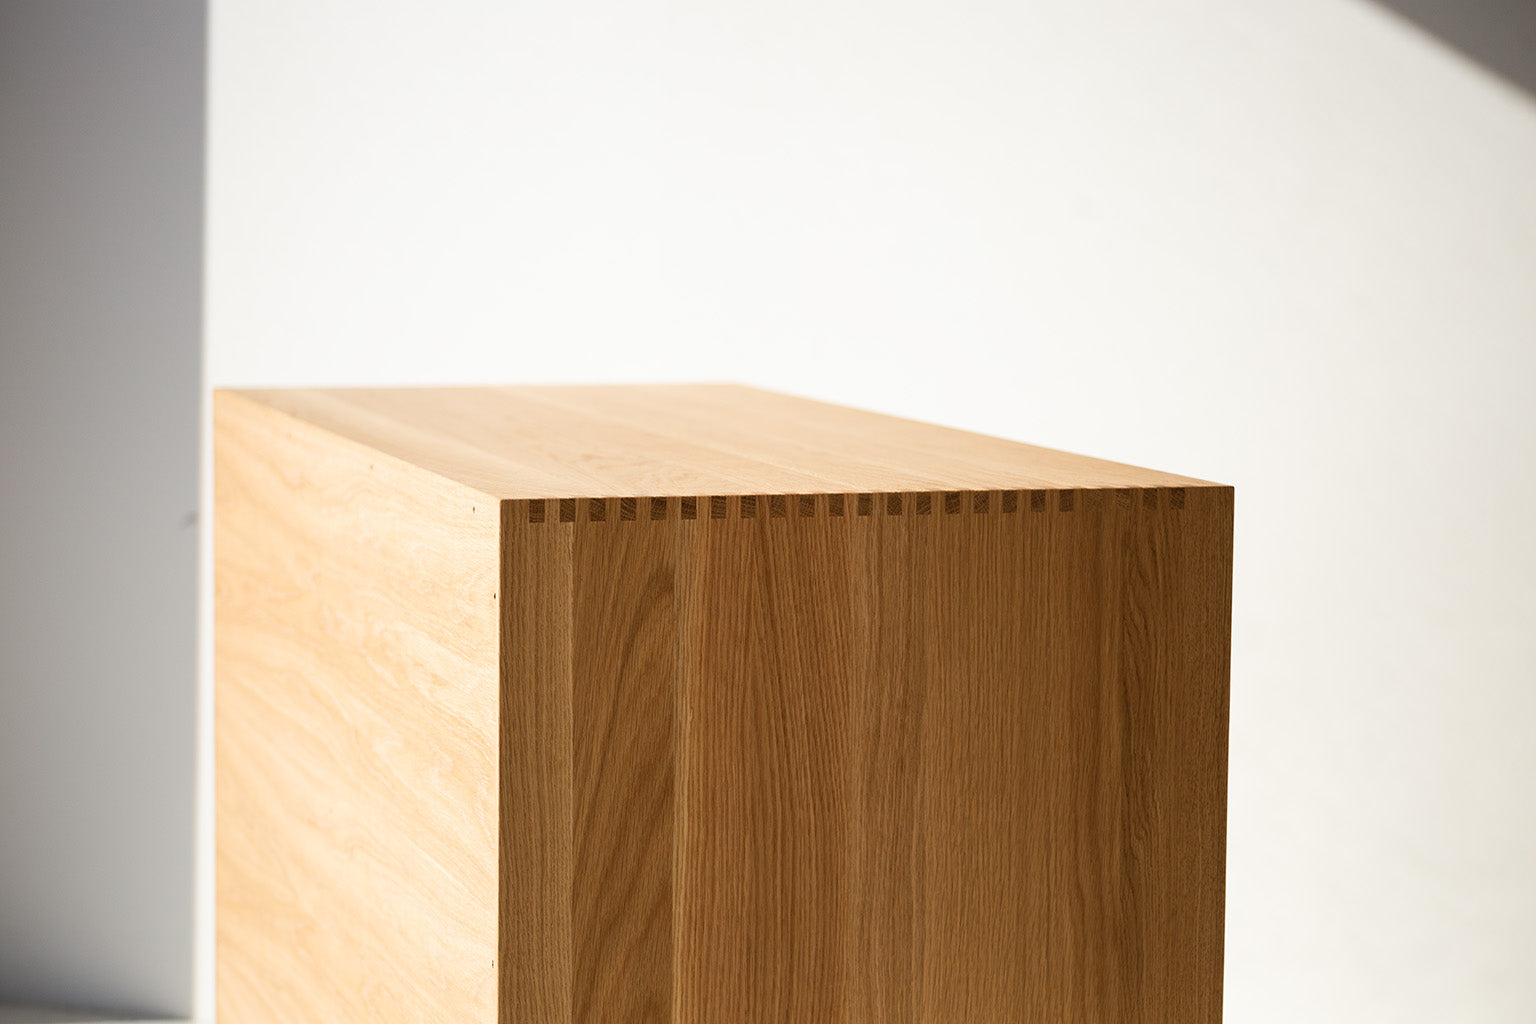 Peabody Modern Oak Dresser - 2201P